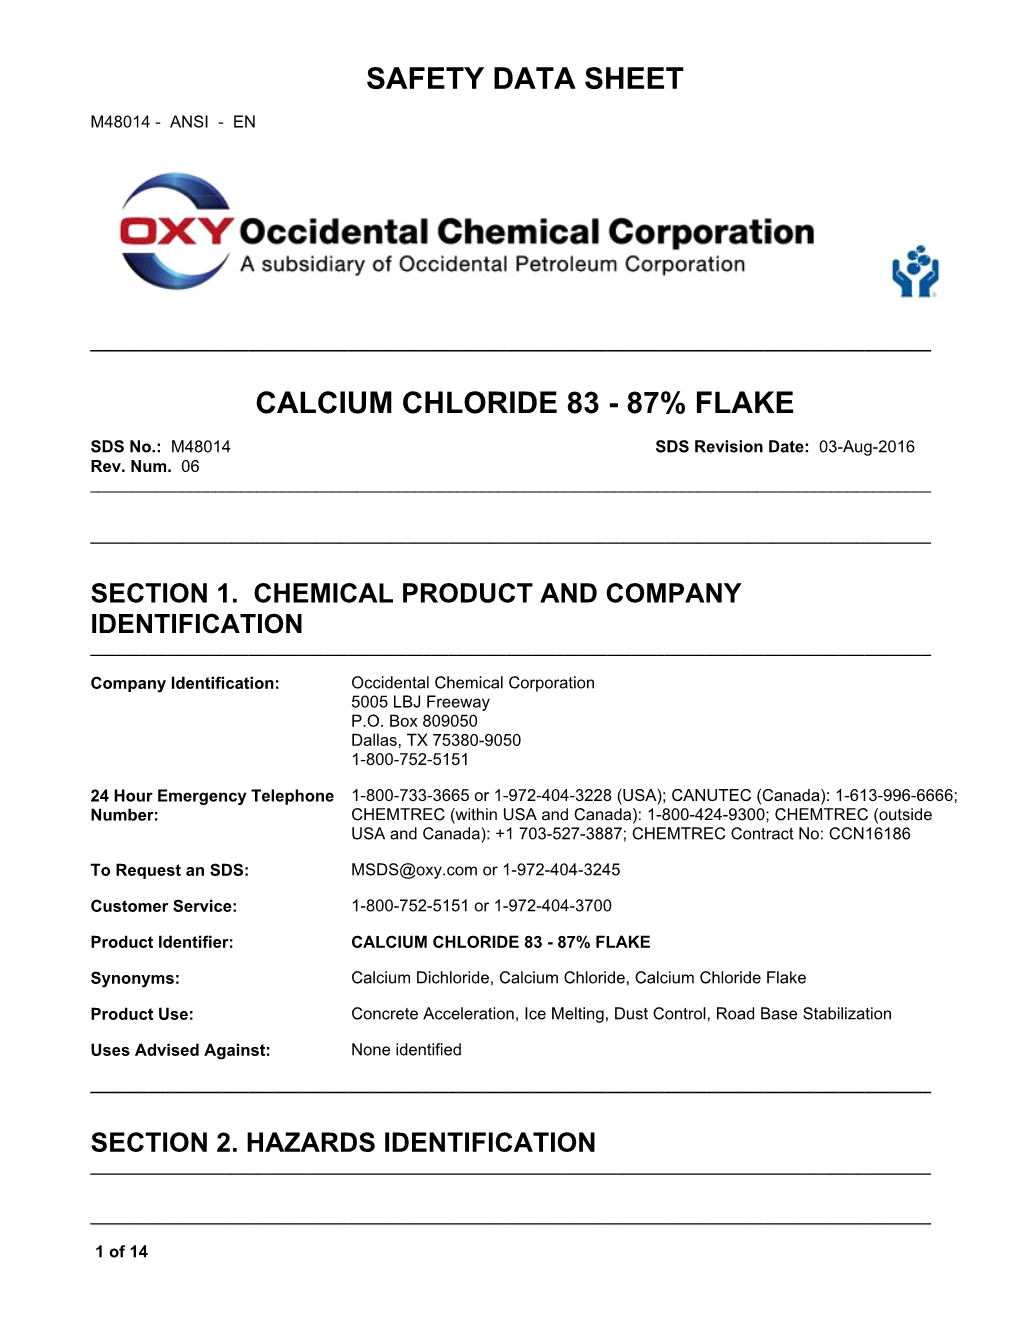 Safety Data Sheet Calcium Chloride 83